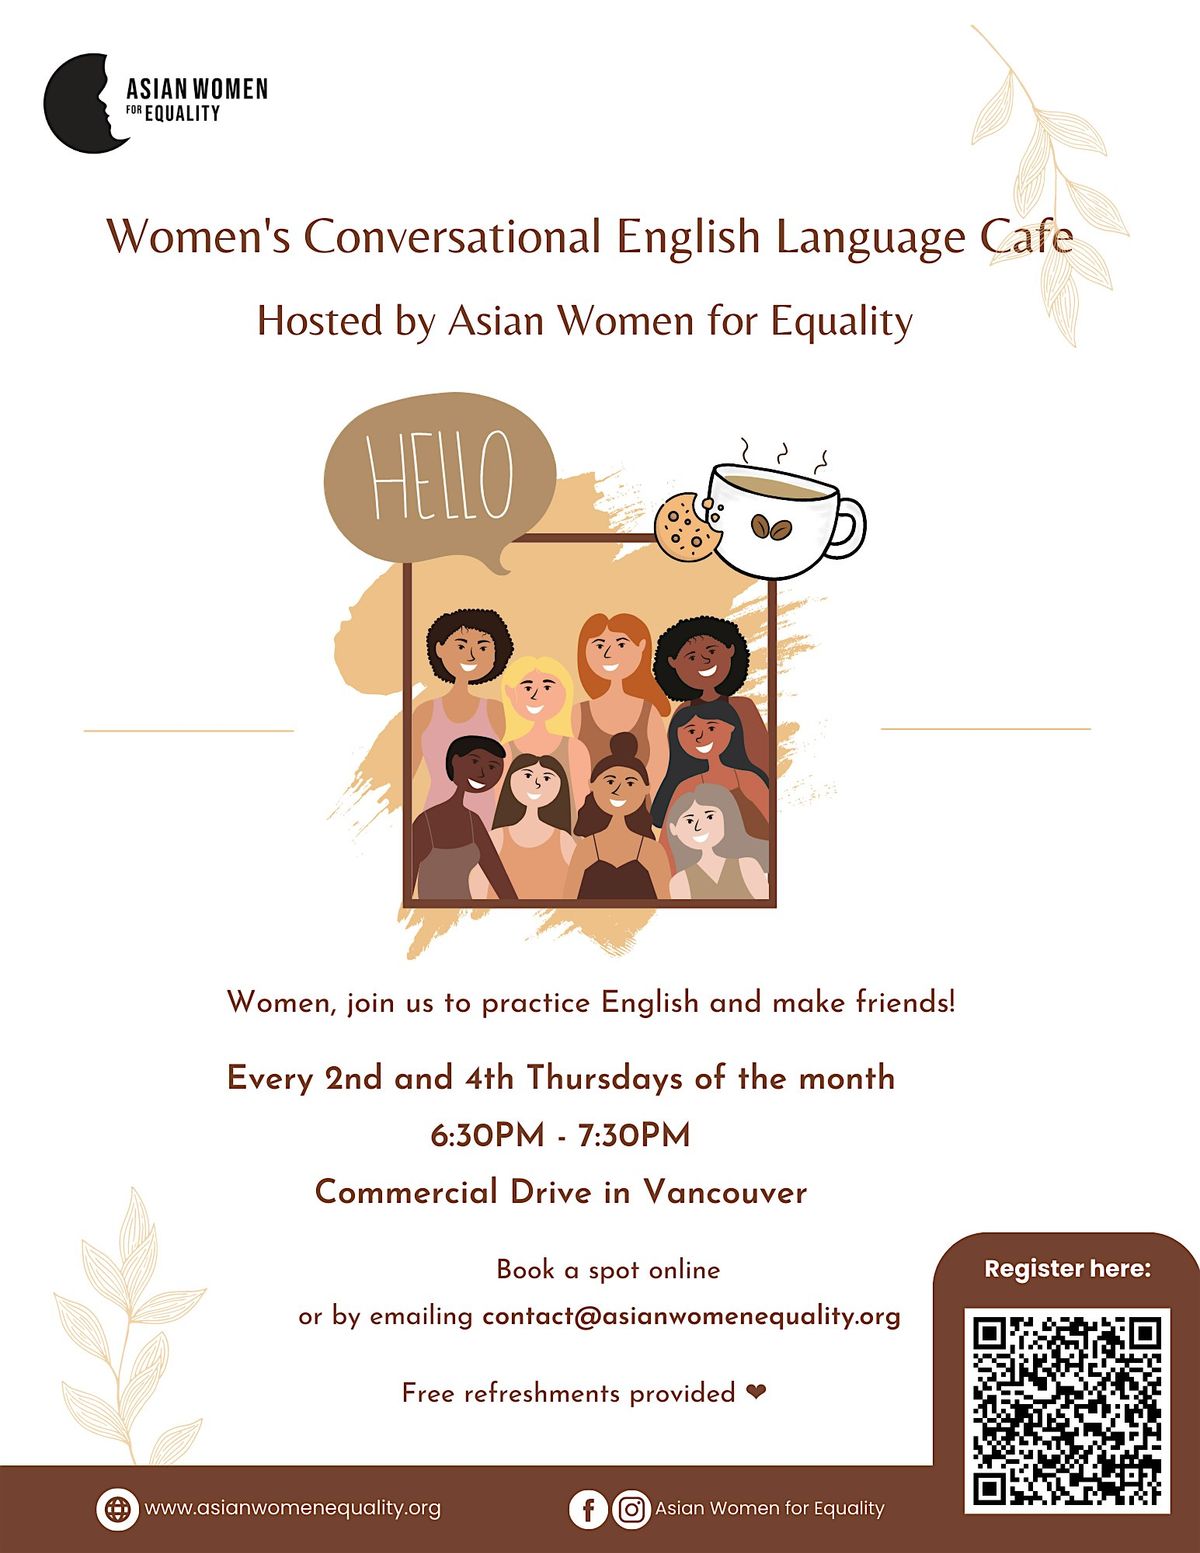 Women's Conversational English Language Cafe